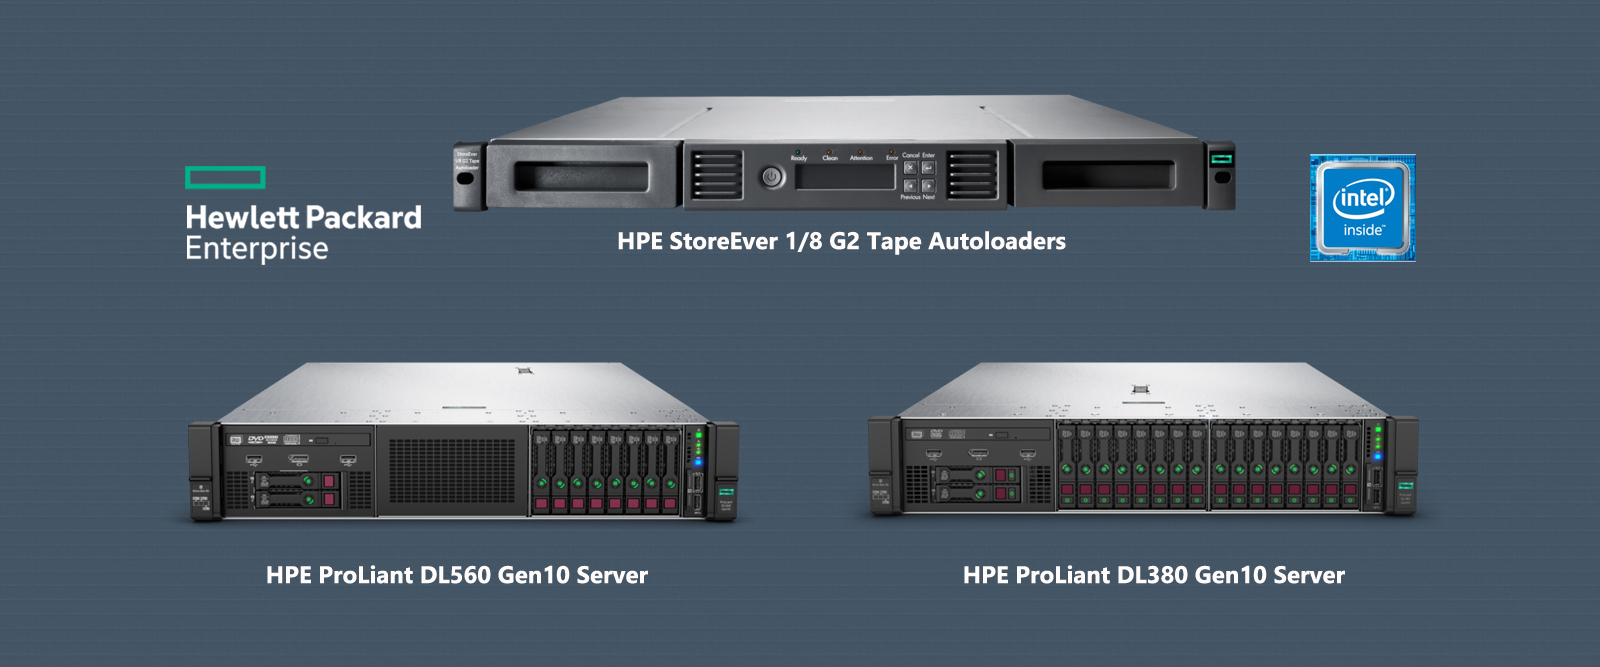 HPE ProLiant DL380 Gen10 Server, HPE ProLiant DL560 Gen10 Server, HPE StoreEver 1/8 G2 Tape Autoloaders